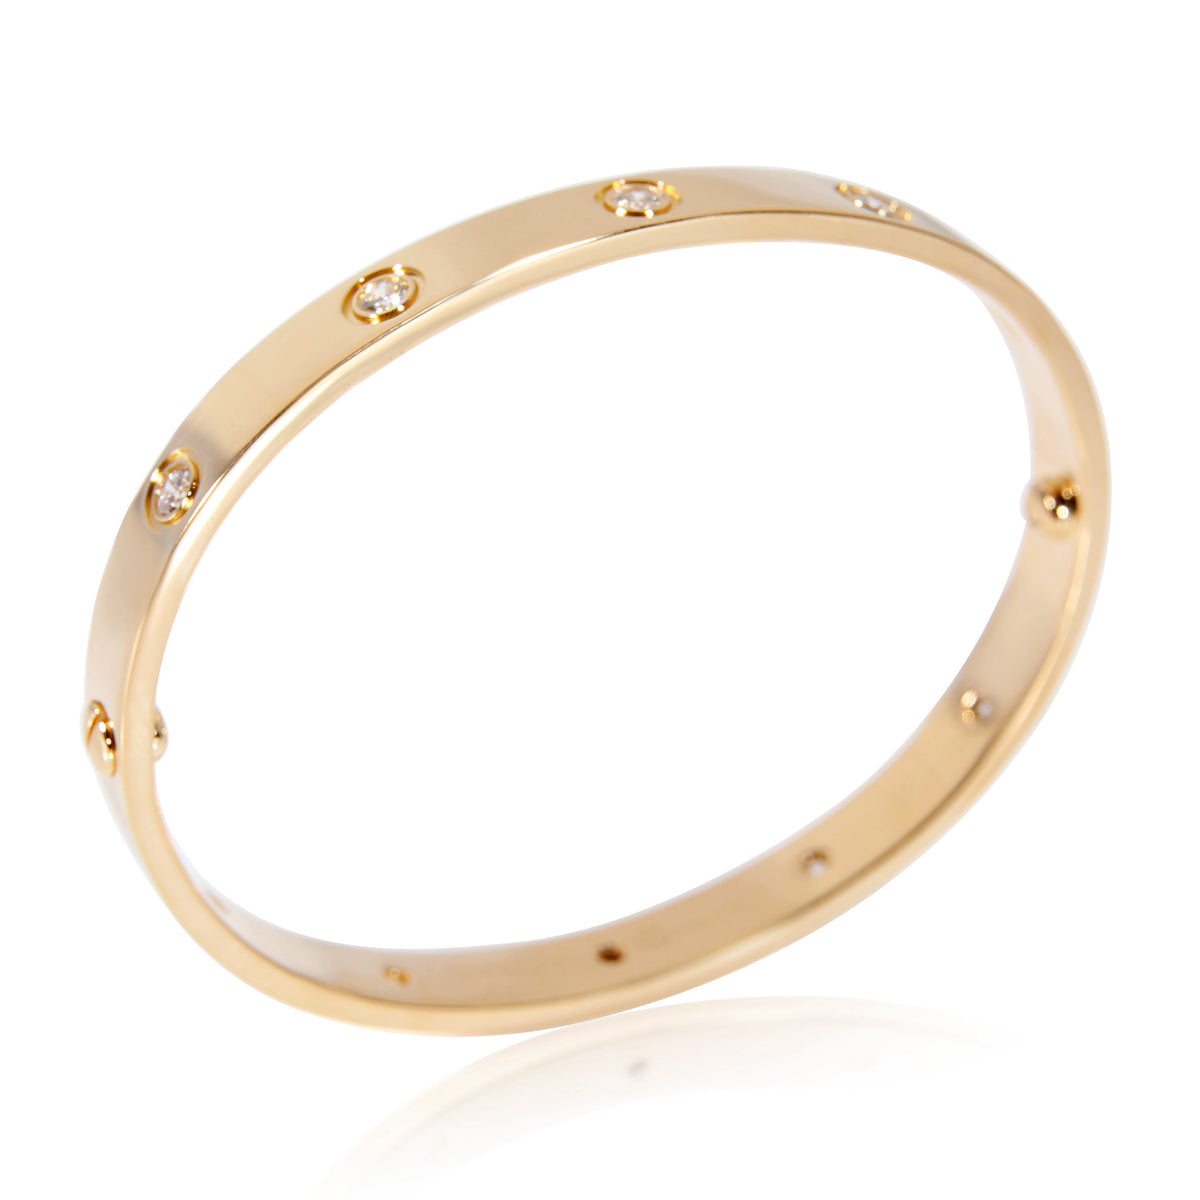 Cartier Love Bracelet with Diamonds in 18K Yellow Gold 0.96 CTW